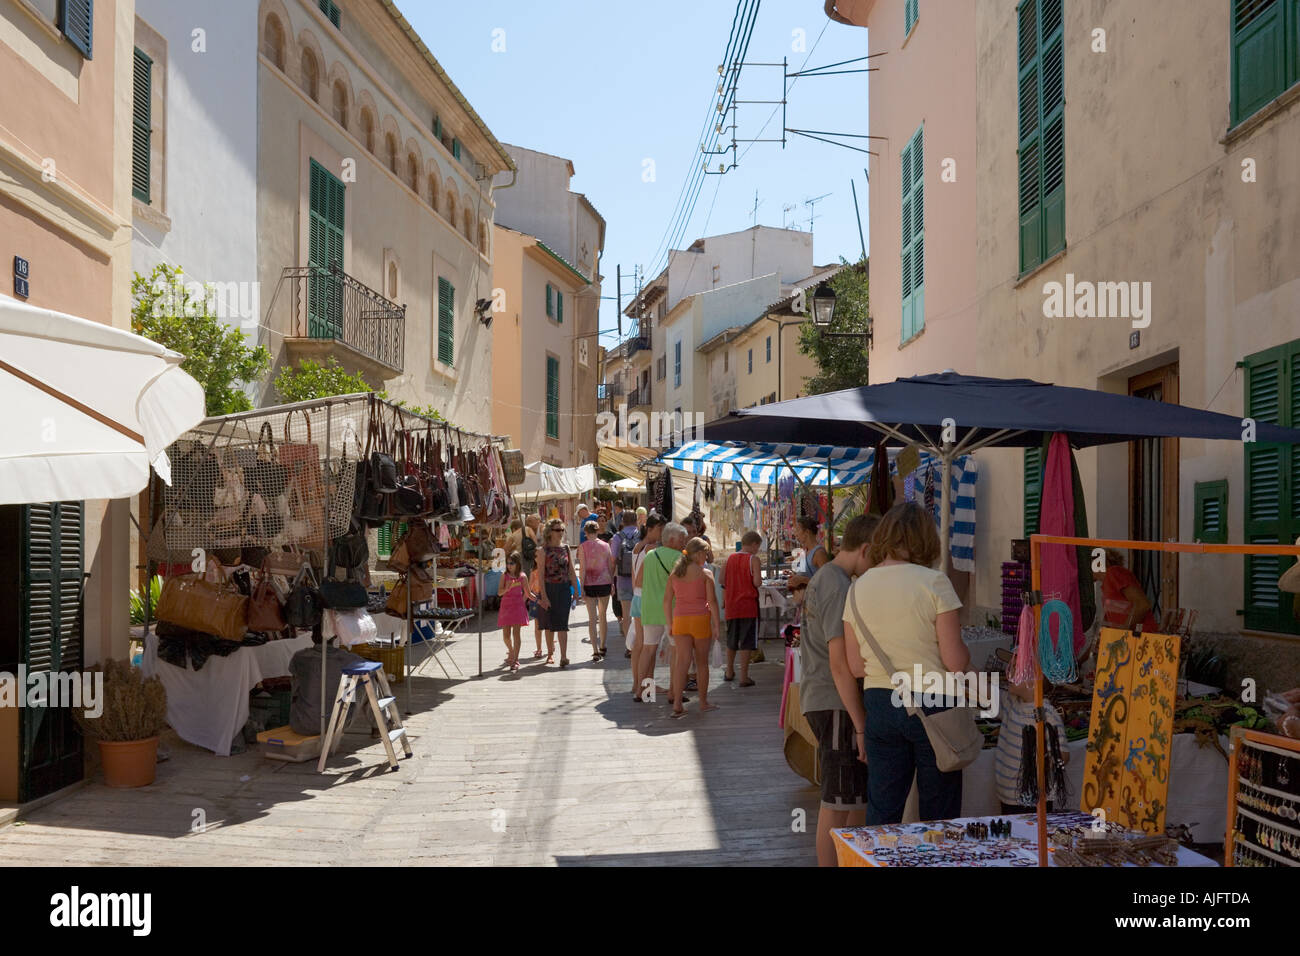 Alcudia Mallorca Market Stock Photos & Alcudia Mallorca Market ...